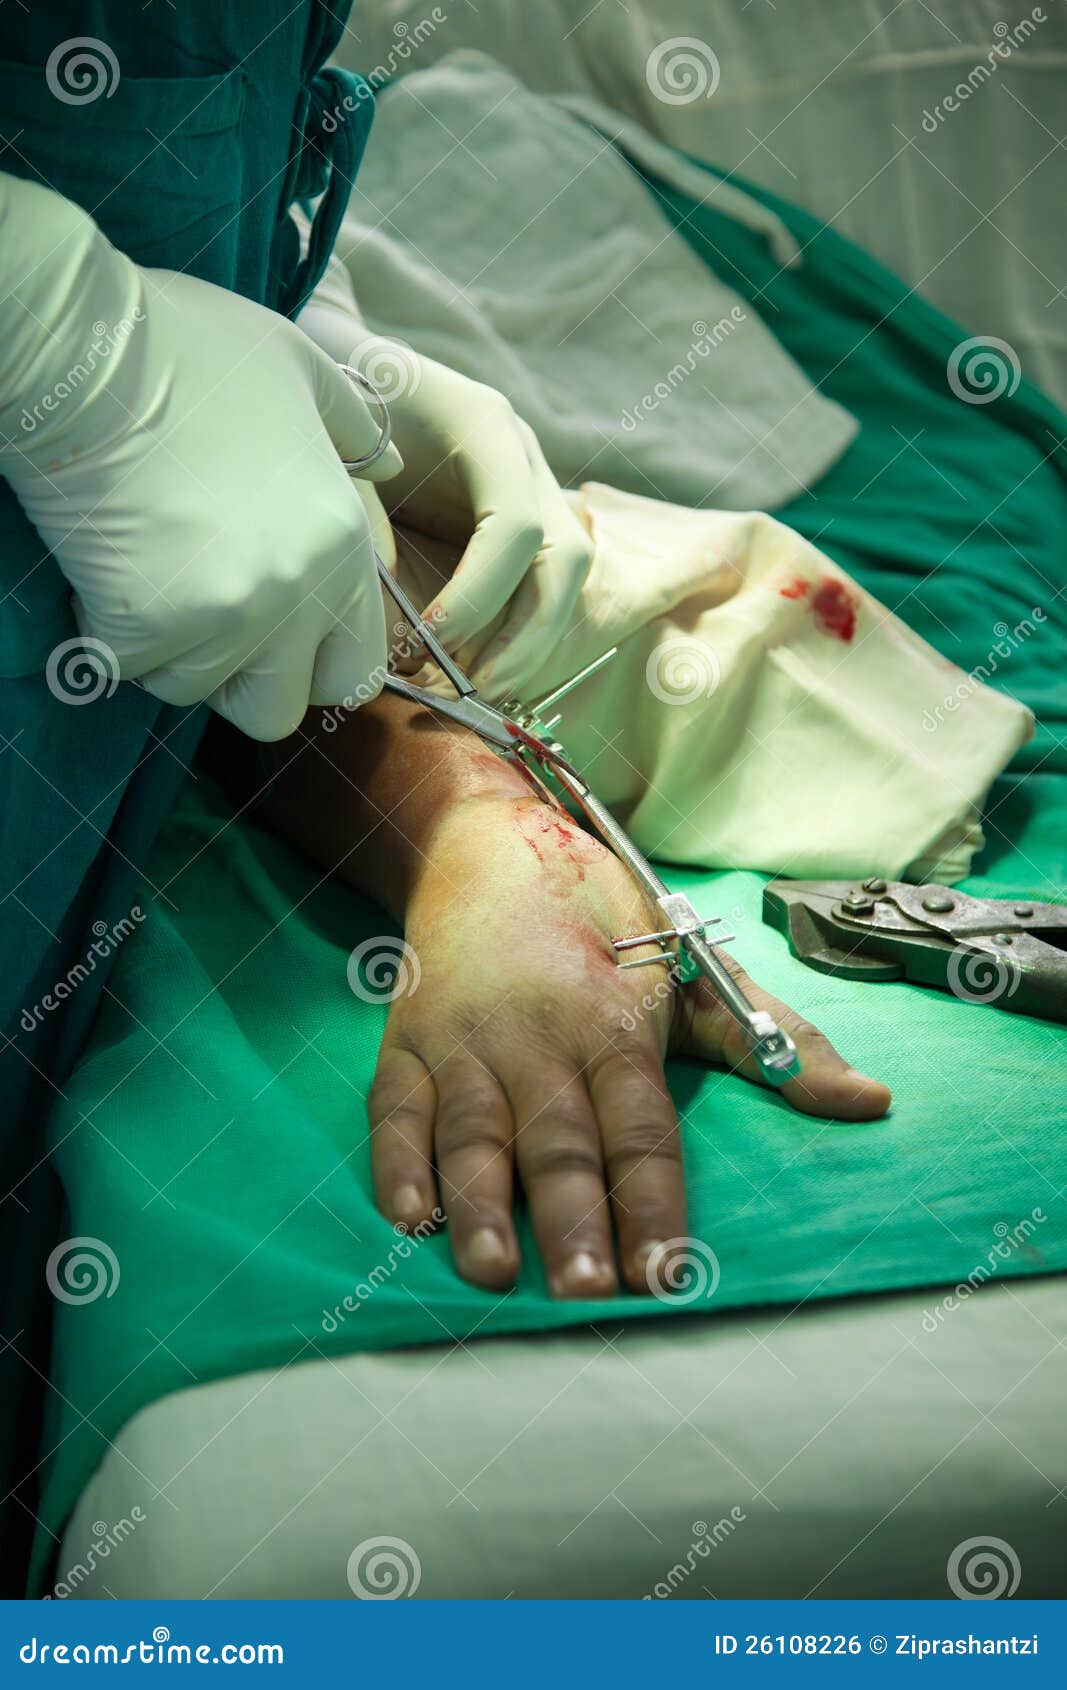 Orthopedic surgery 6 stock photo. Image of busy, operating ...